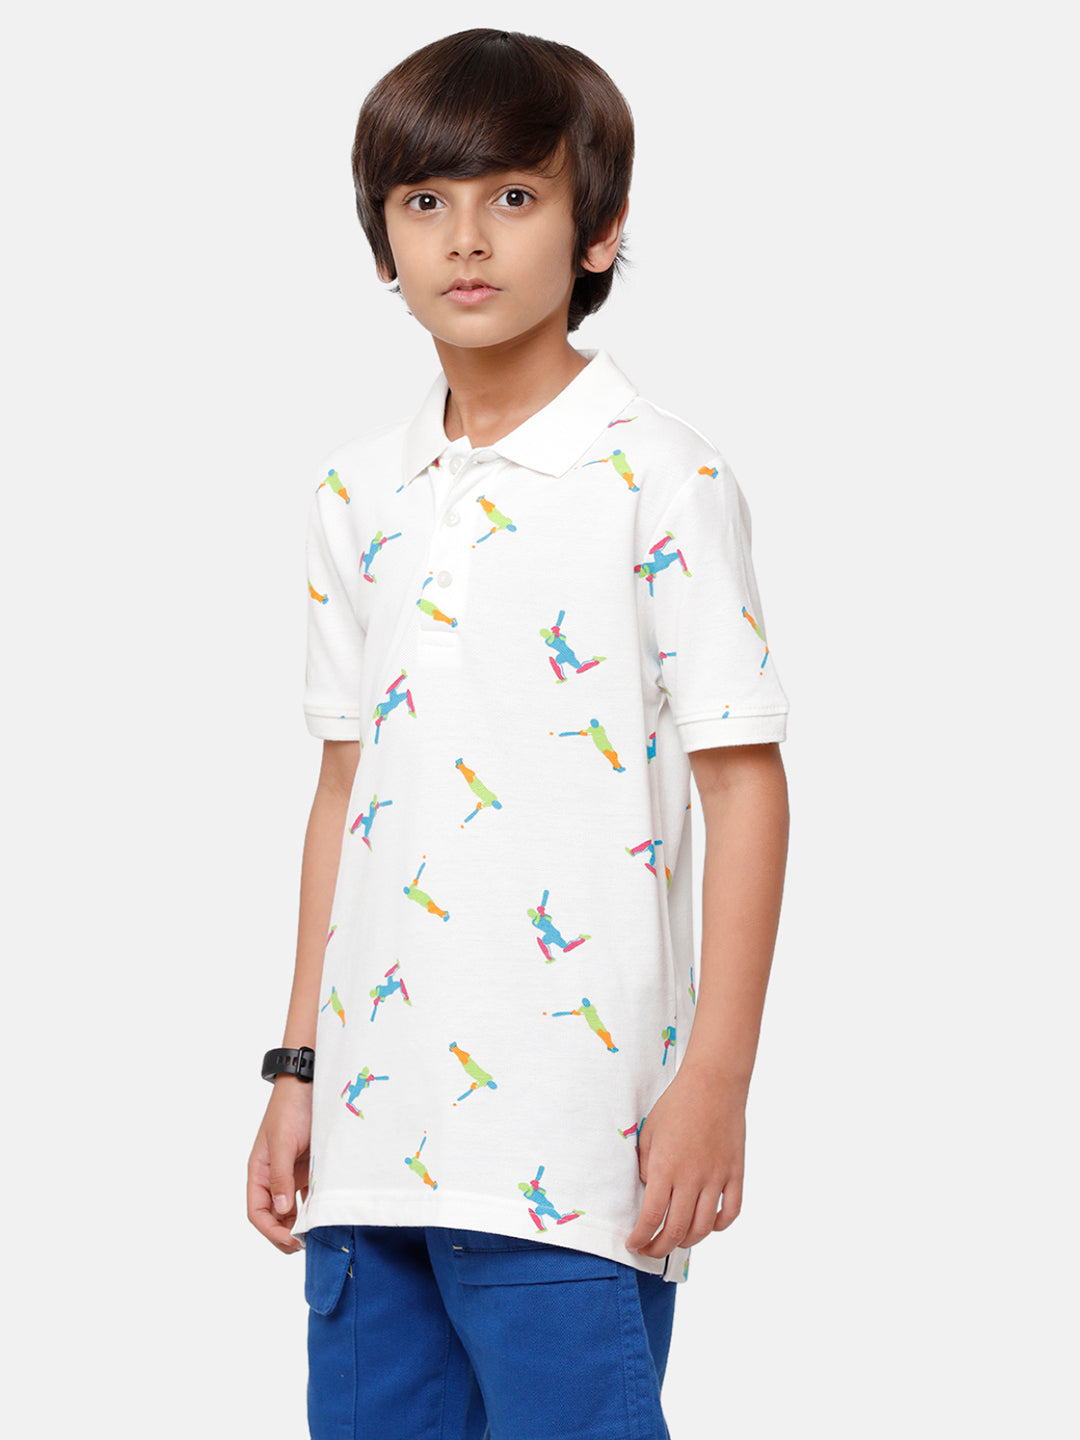 Kids - Boys Printed Half Sleeve T-Shirt Offwhite